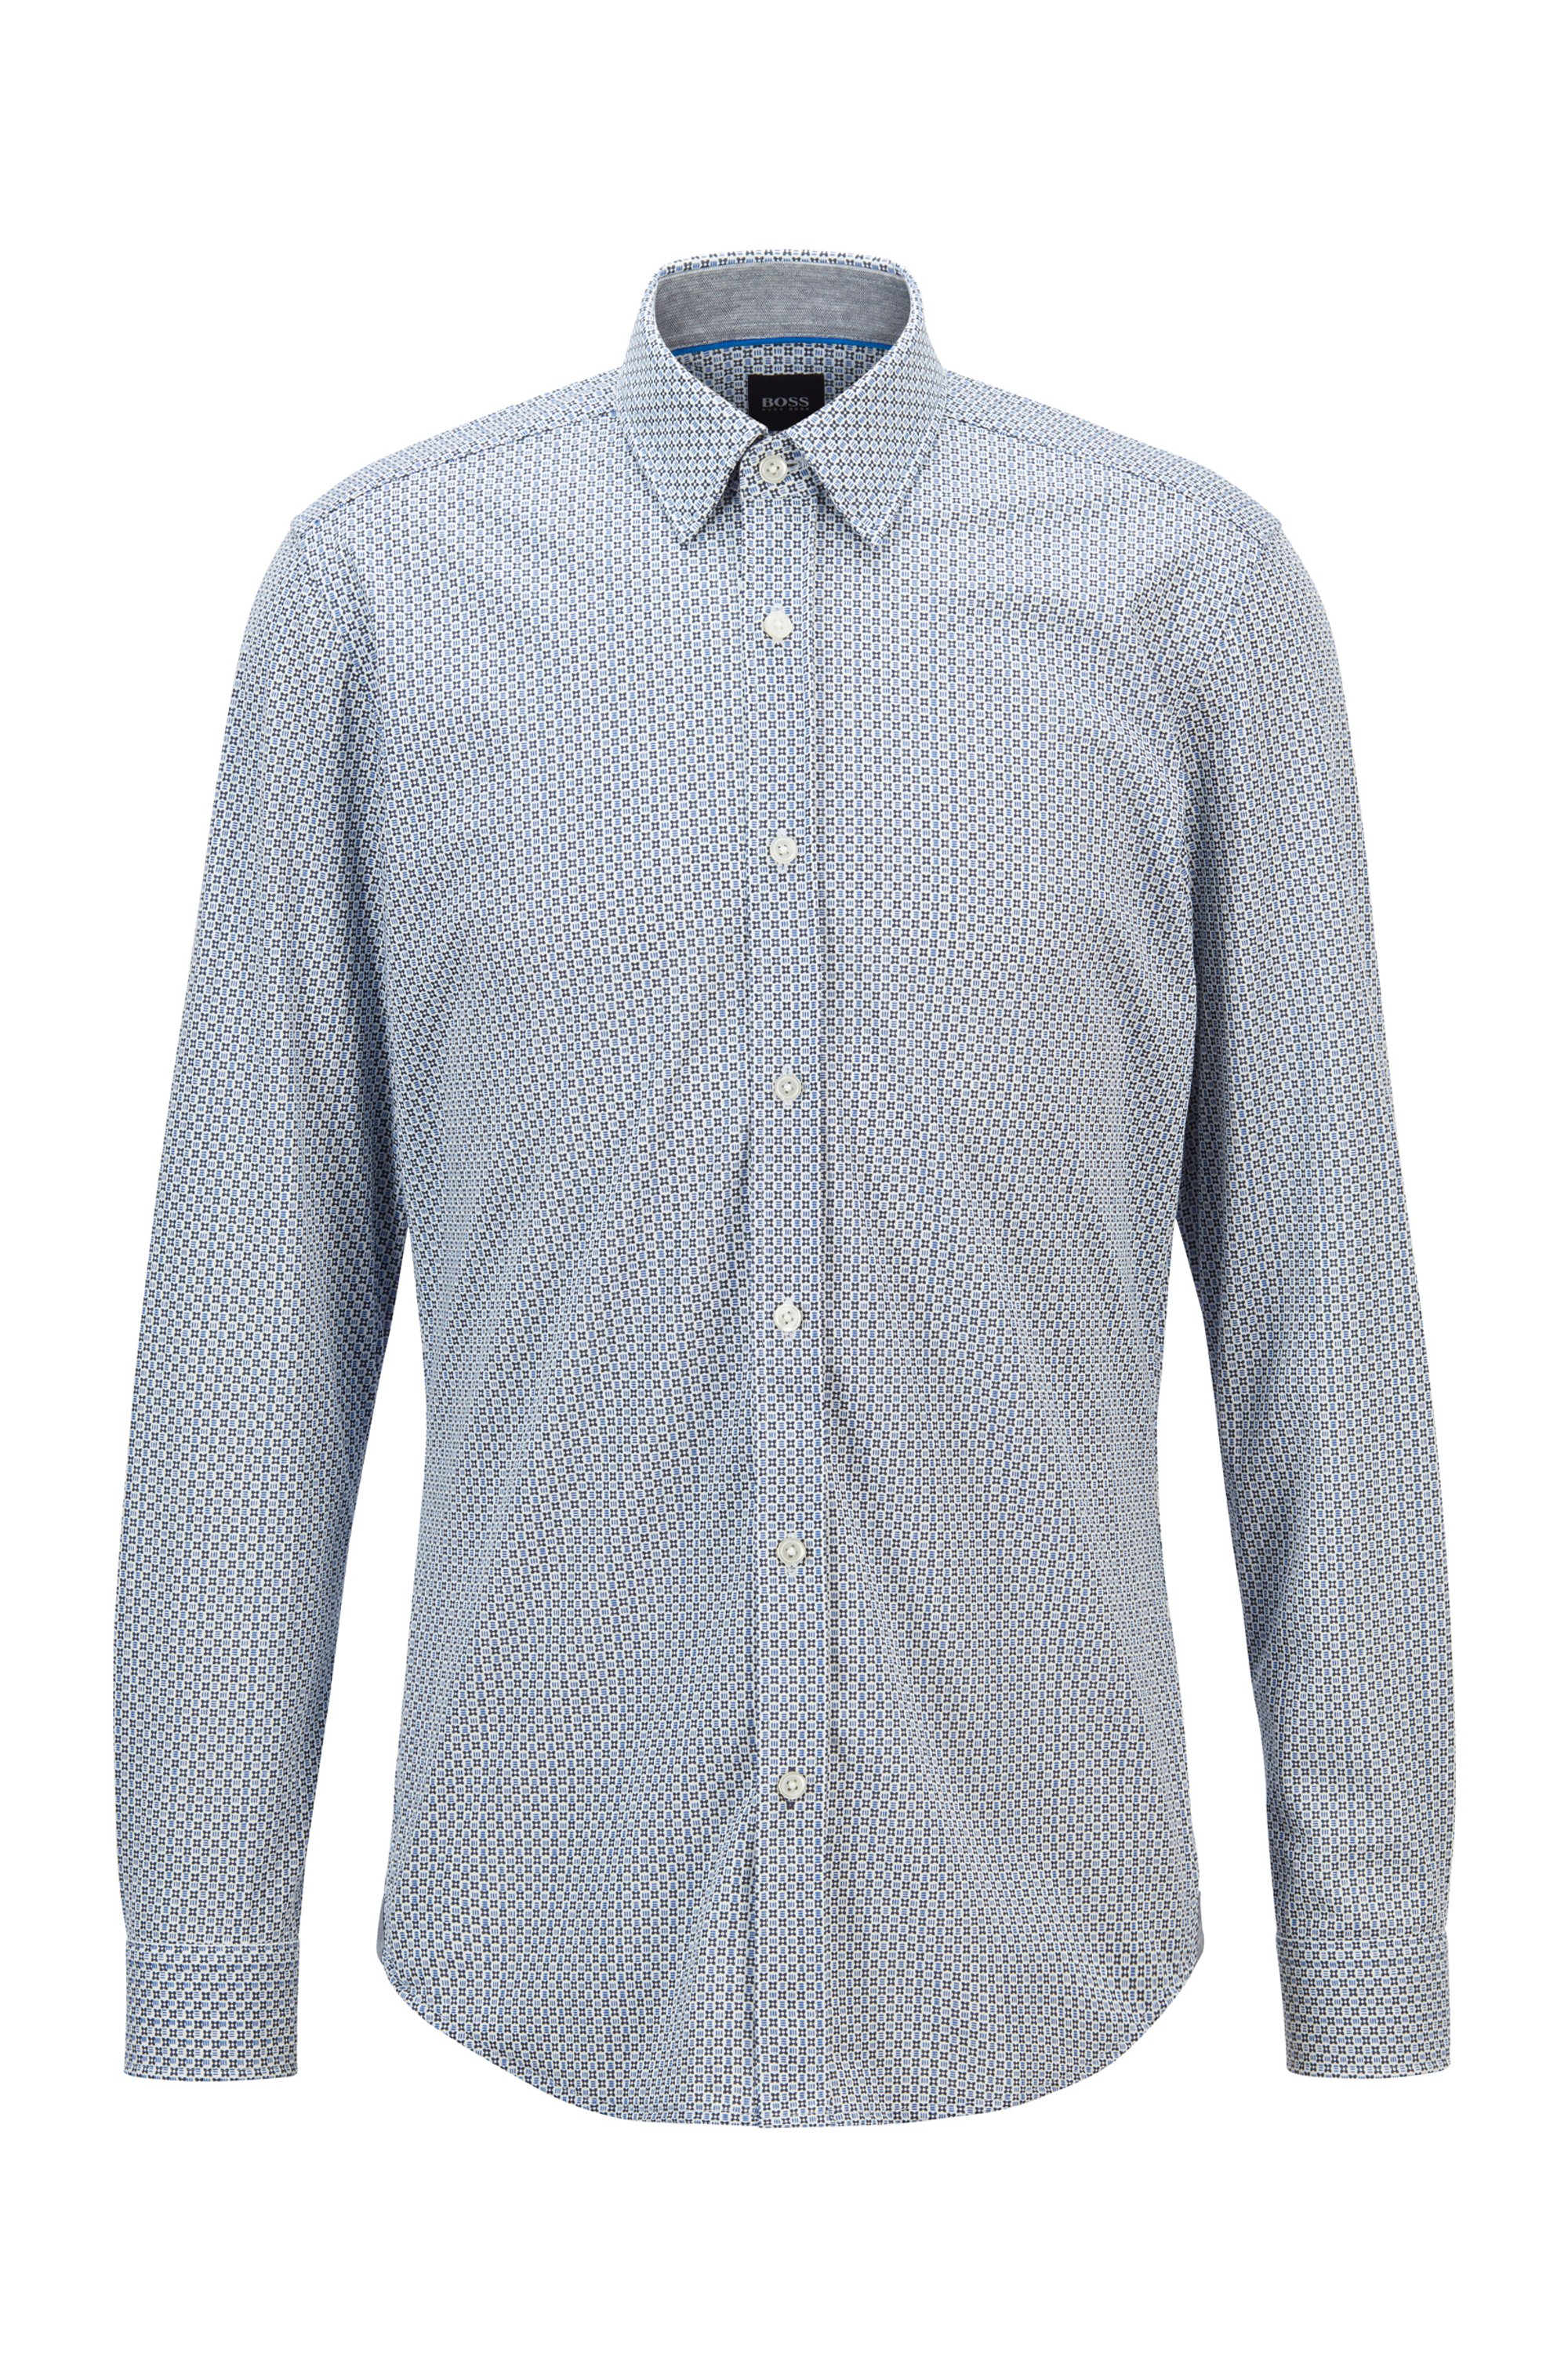 Regular-fit shirt in patterned flex-weave fabric, Light Blue